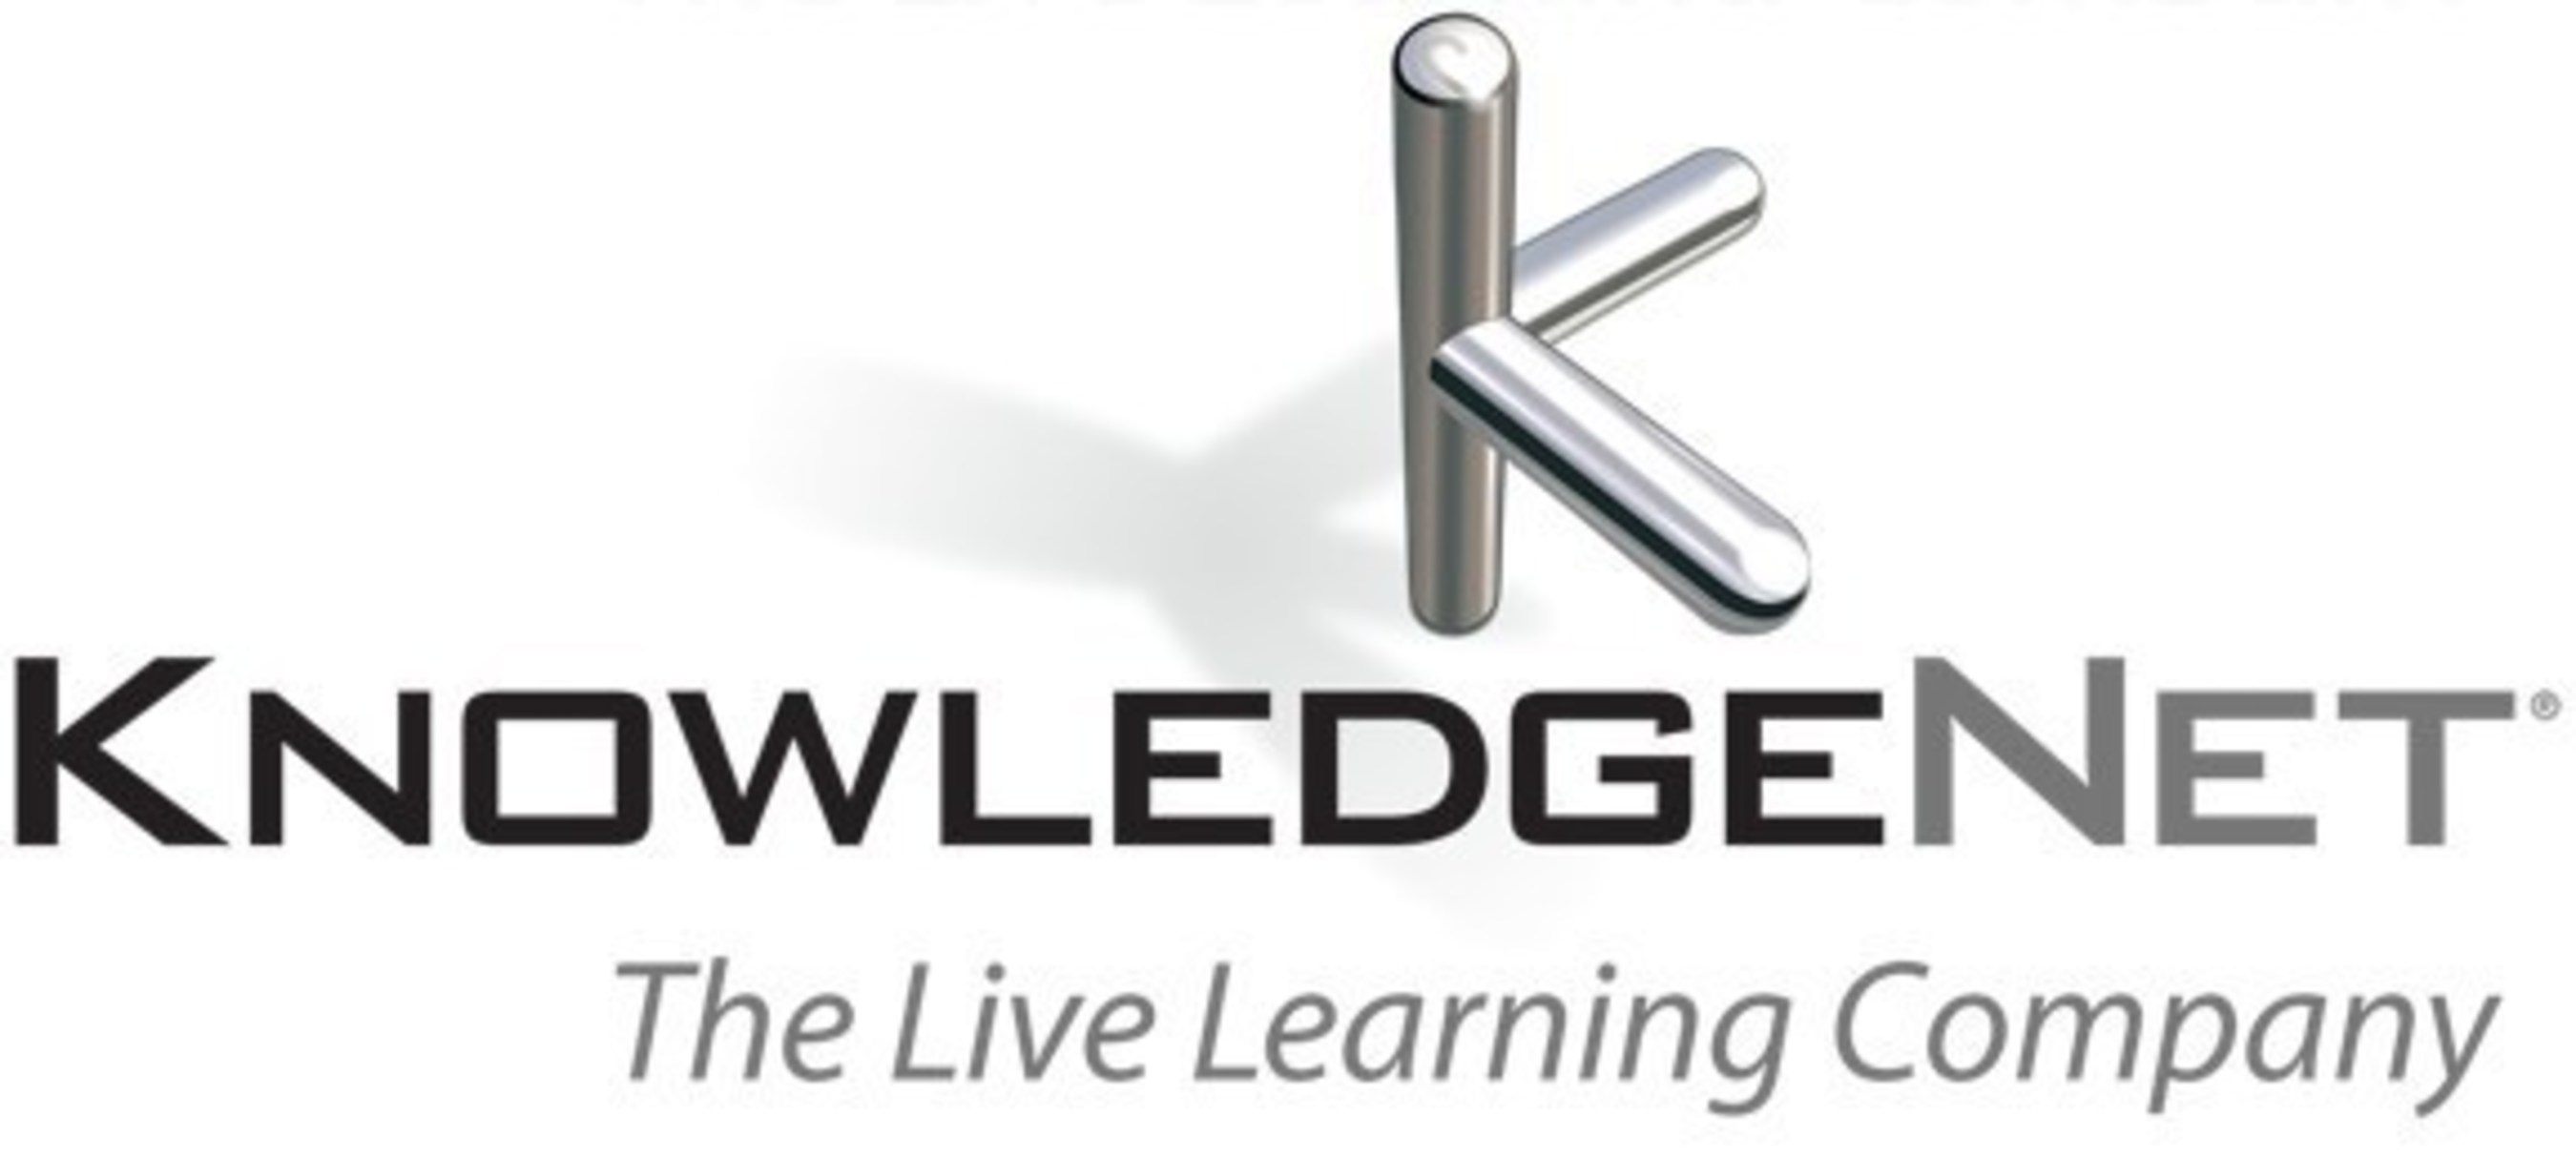 KnowledgeNet - The Live Learning Company (PRNewsFoto/KnowledgeNet)